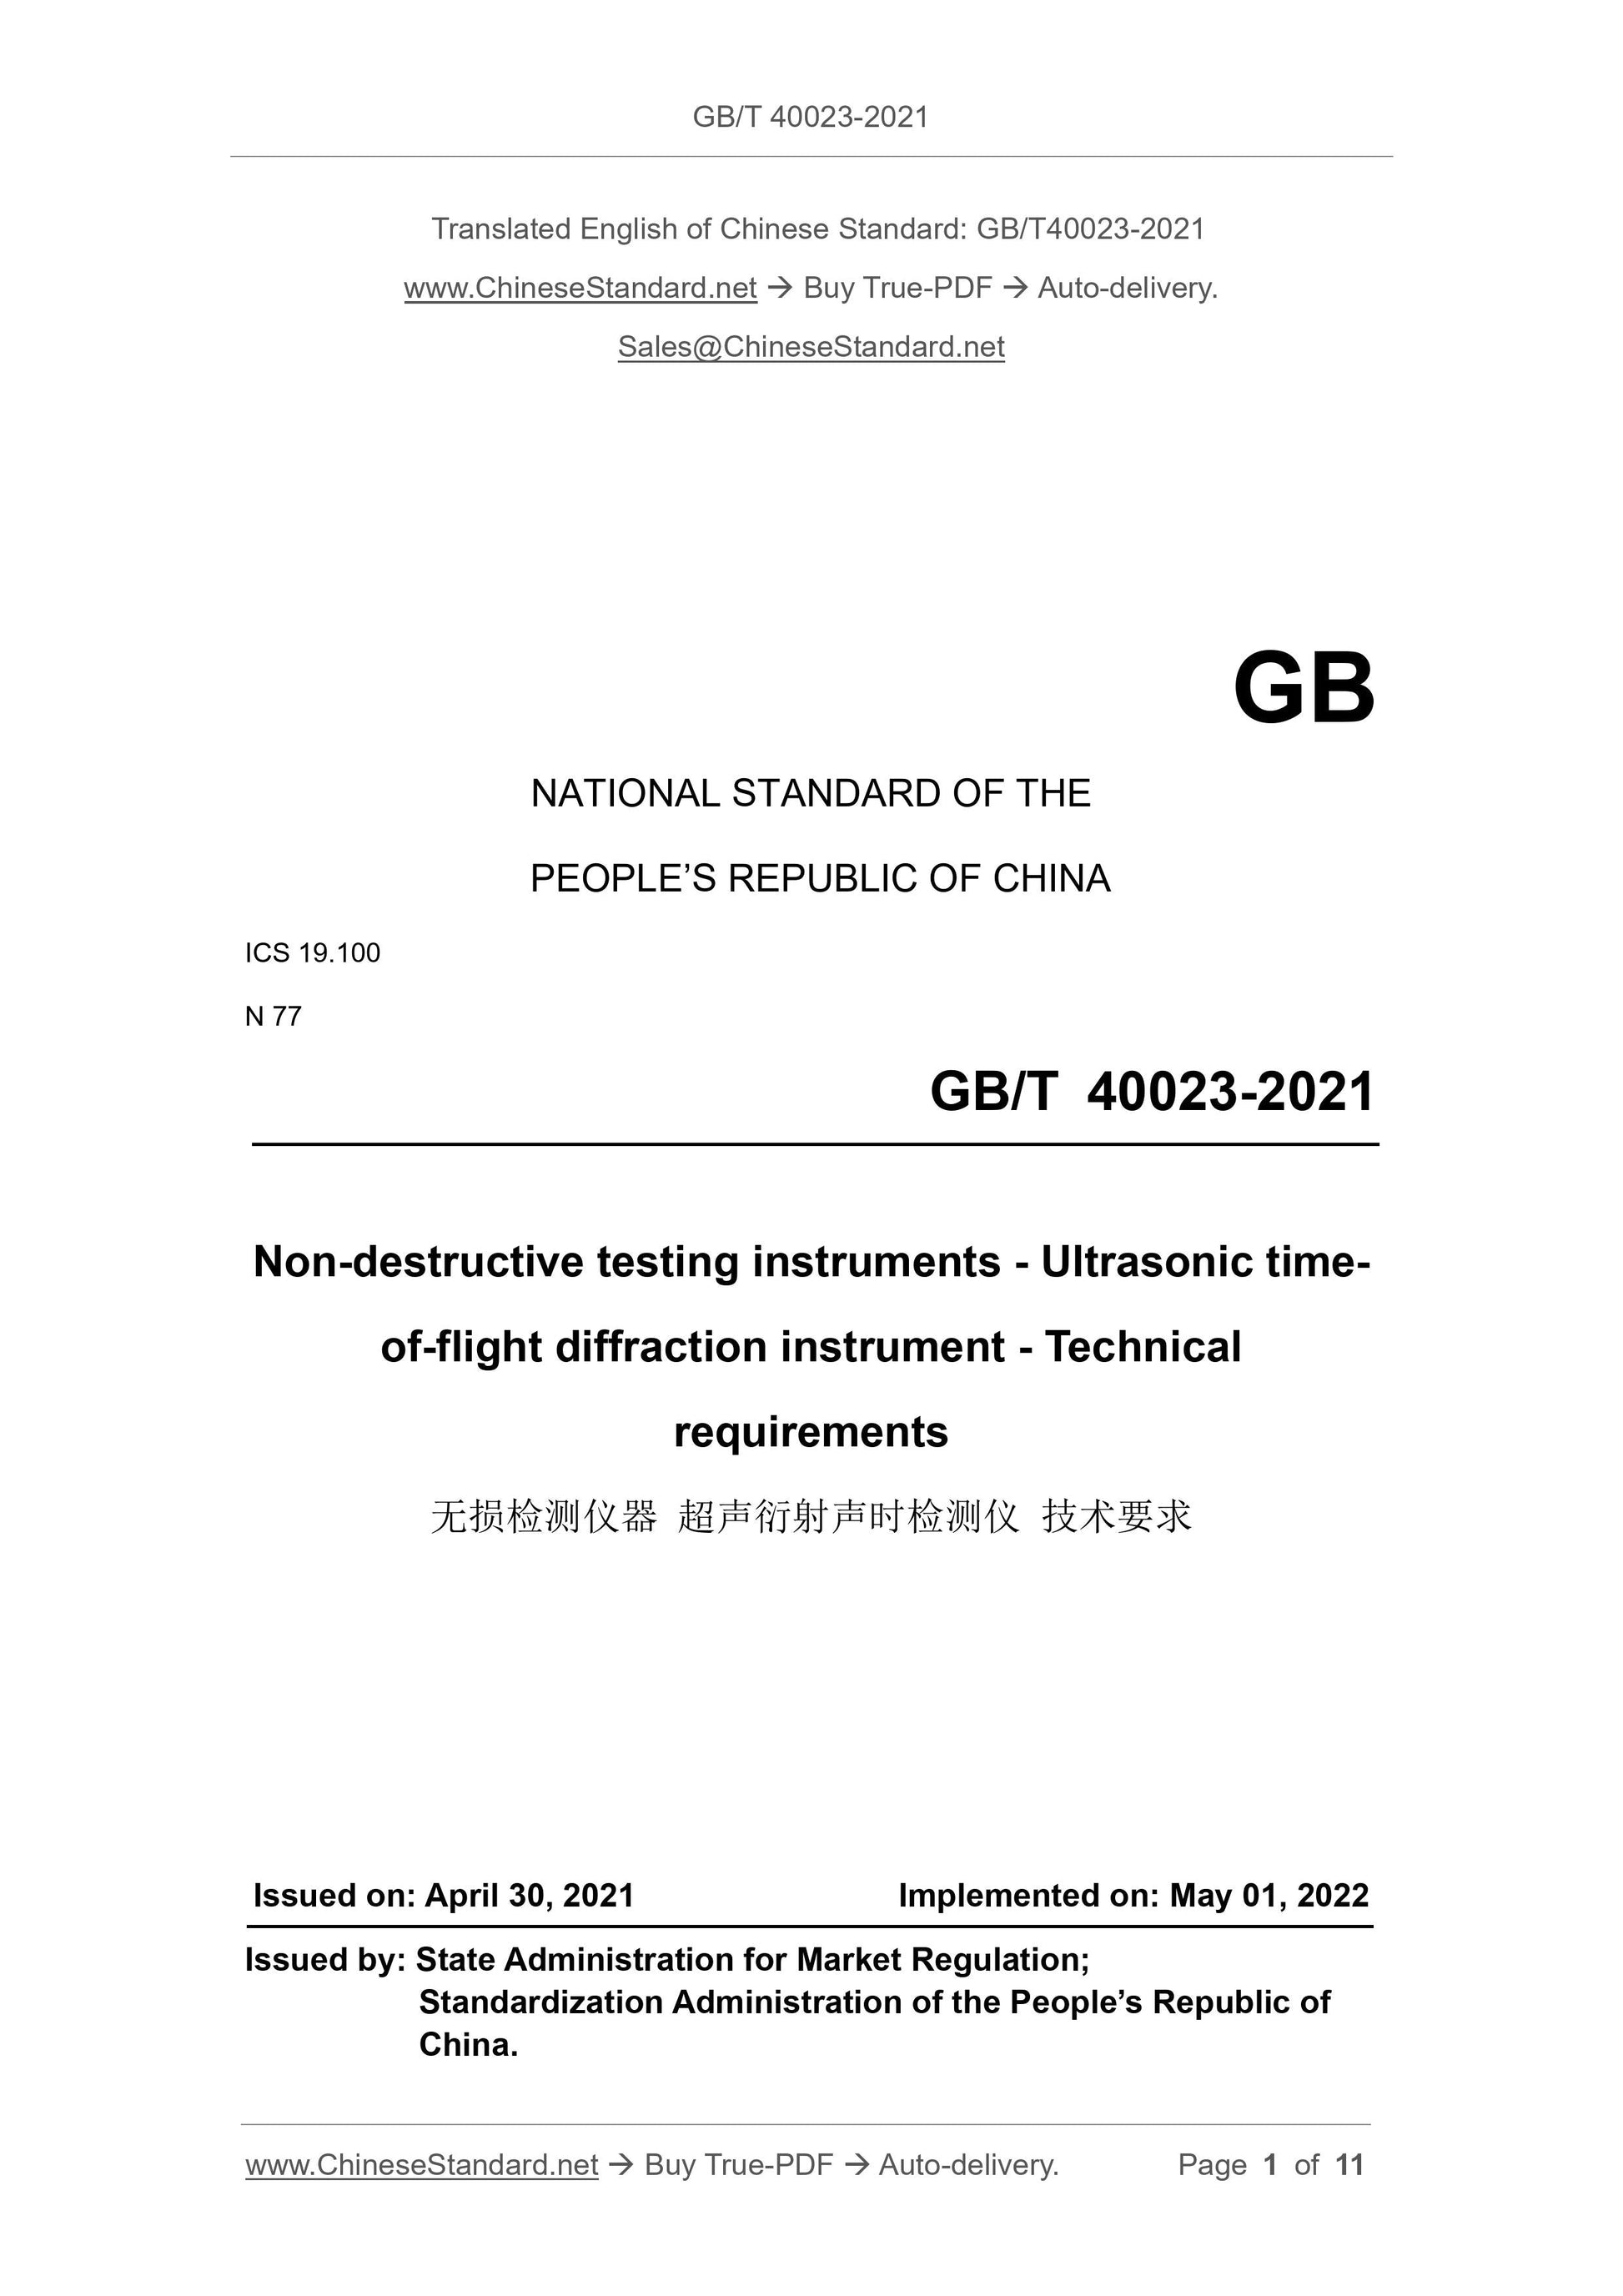 GBT40023-2021 Page 1